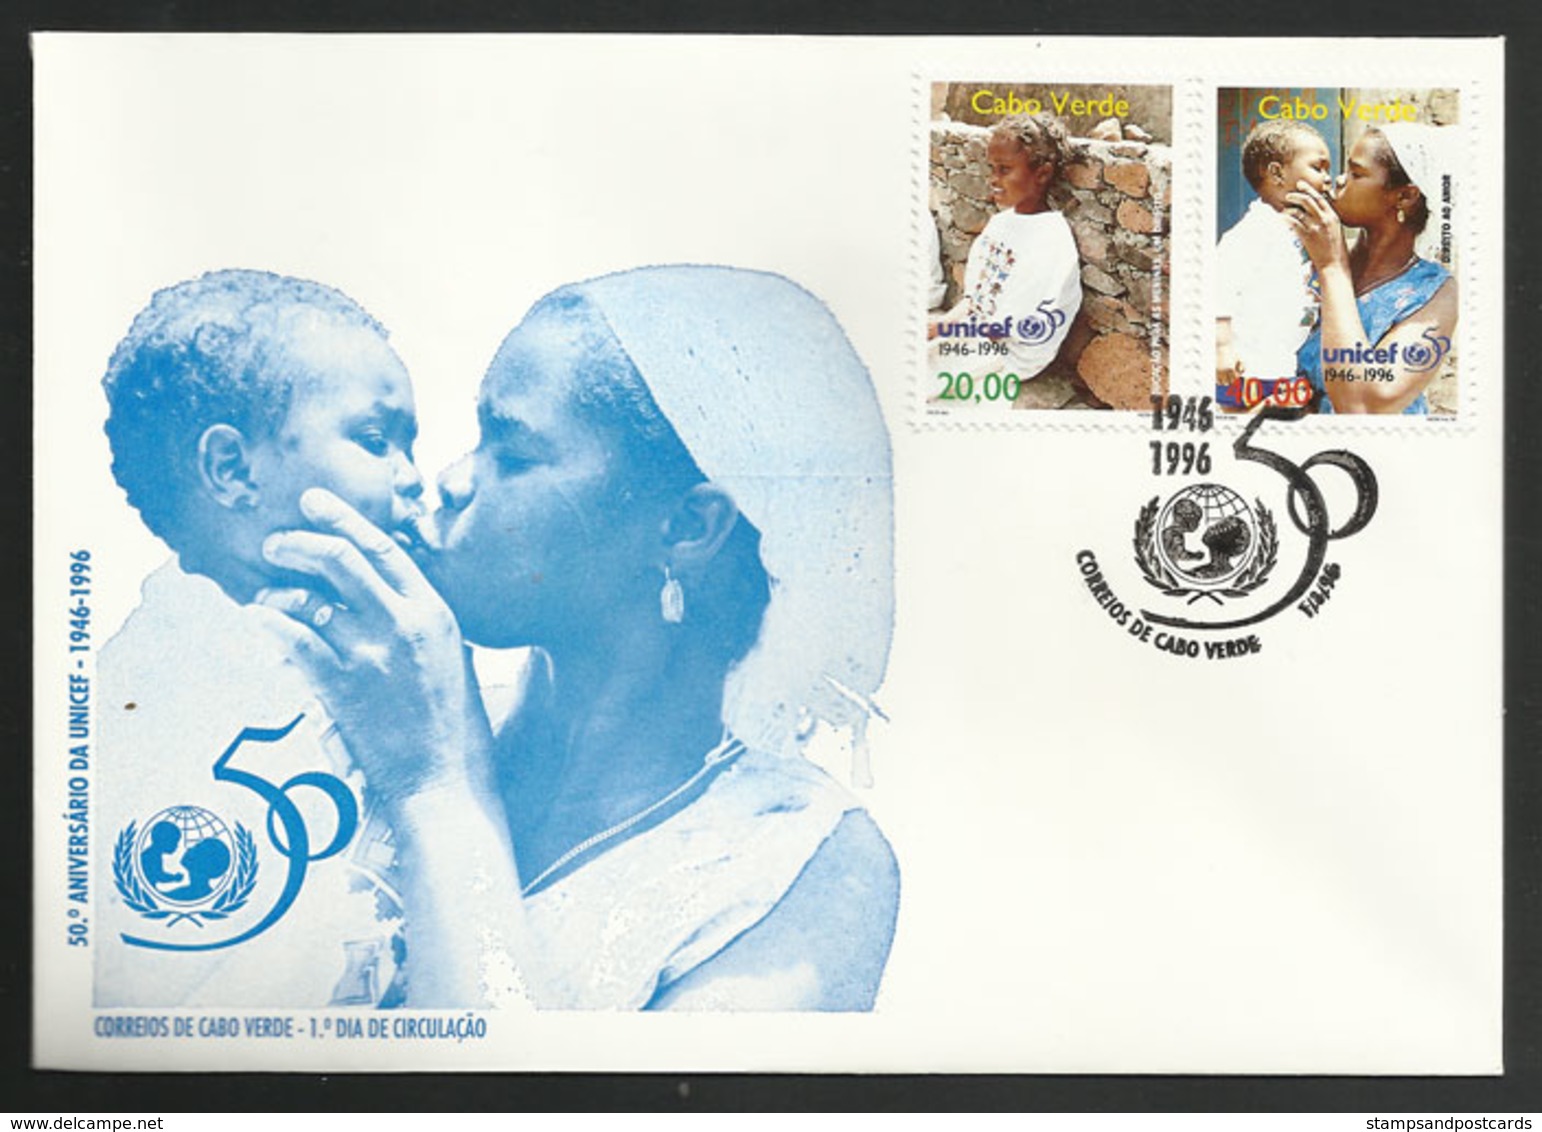 Cabo Verde Cap Vert UNICEF 50 Ans FDC 1996 Cape Verde 50 Years UNICEF FDC - Islas De Cabo Verde